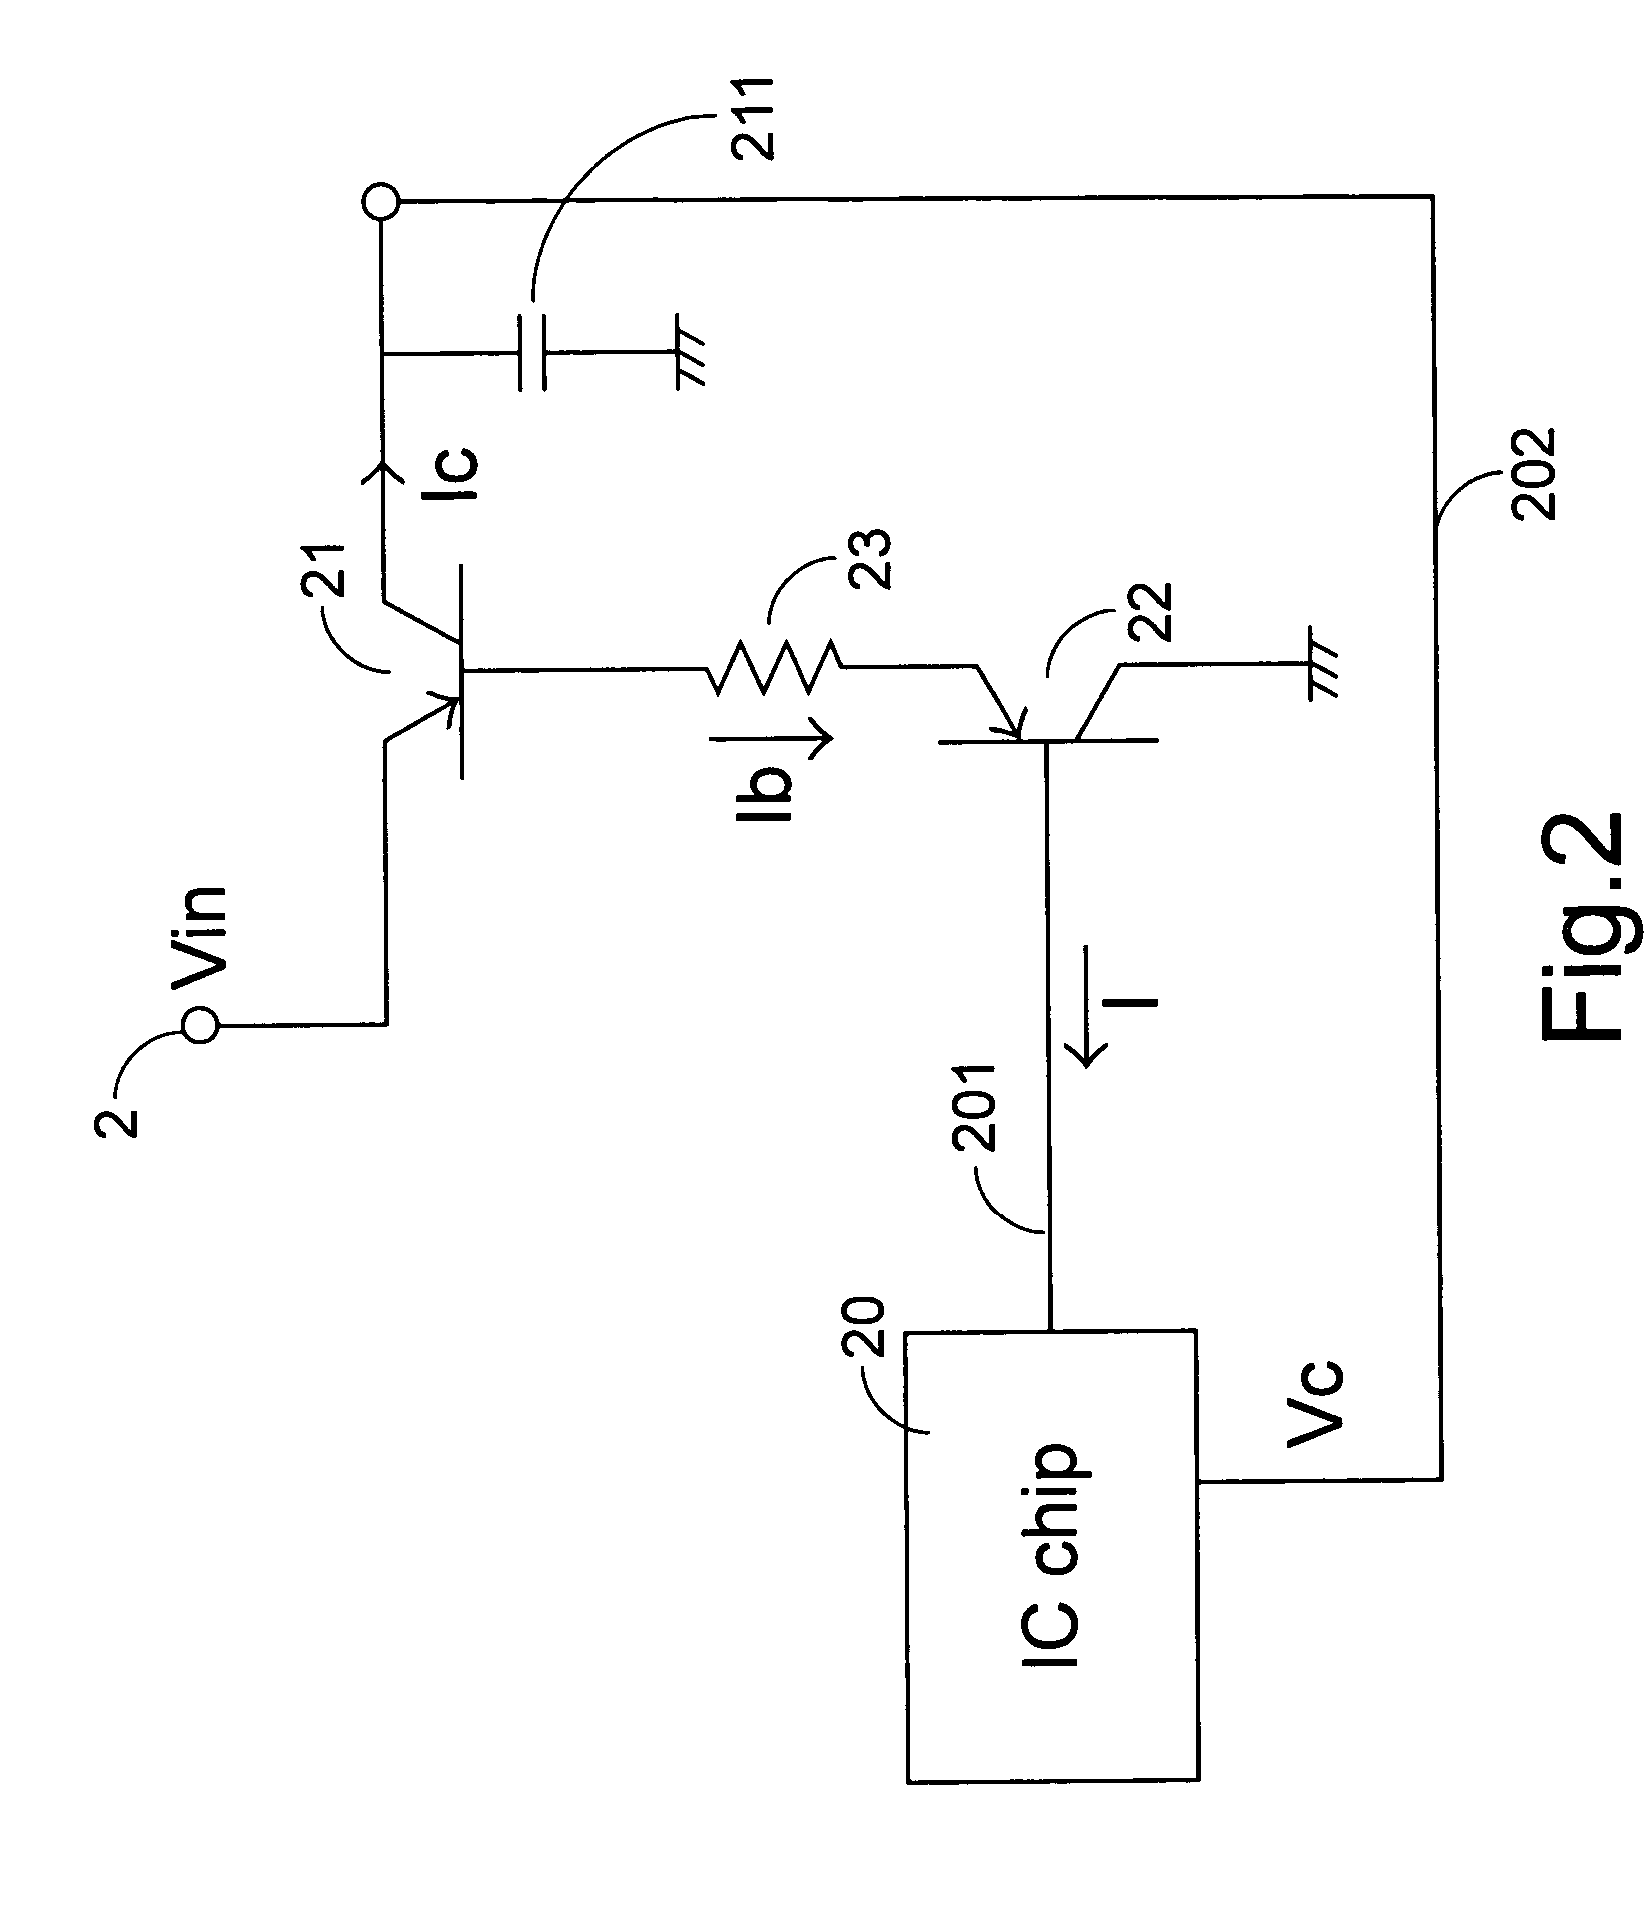 Voltage regulator circuit of integrated circuit chip